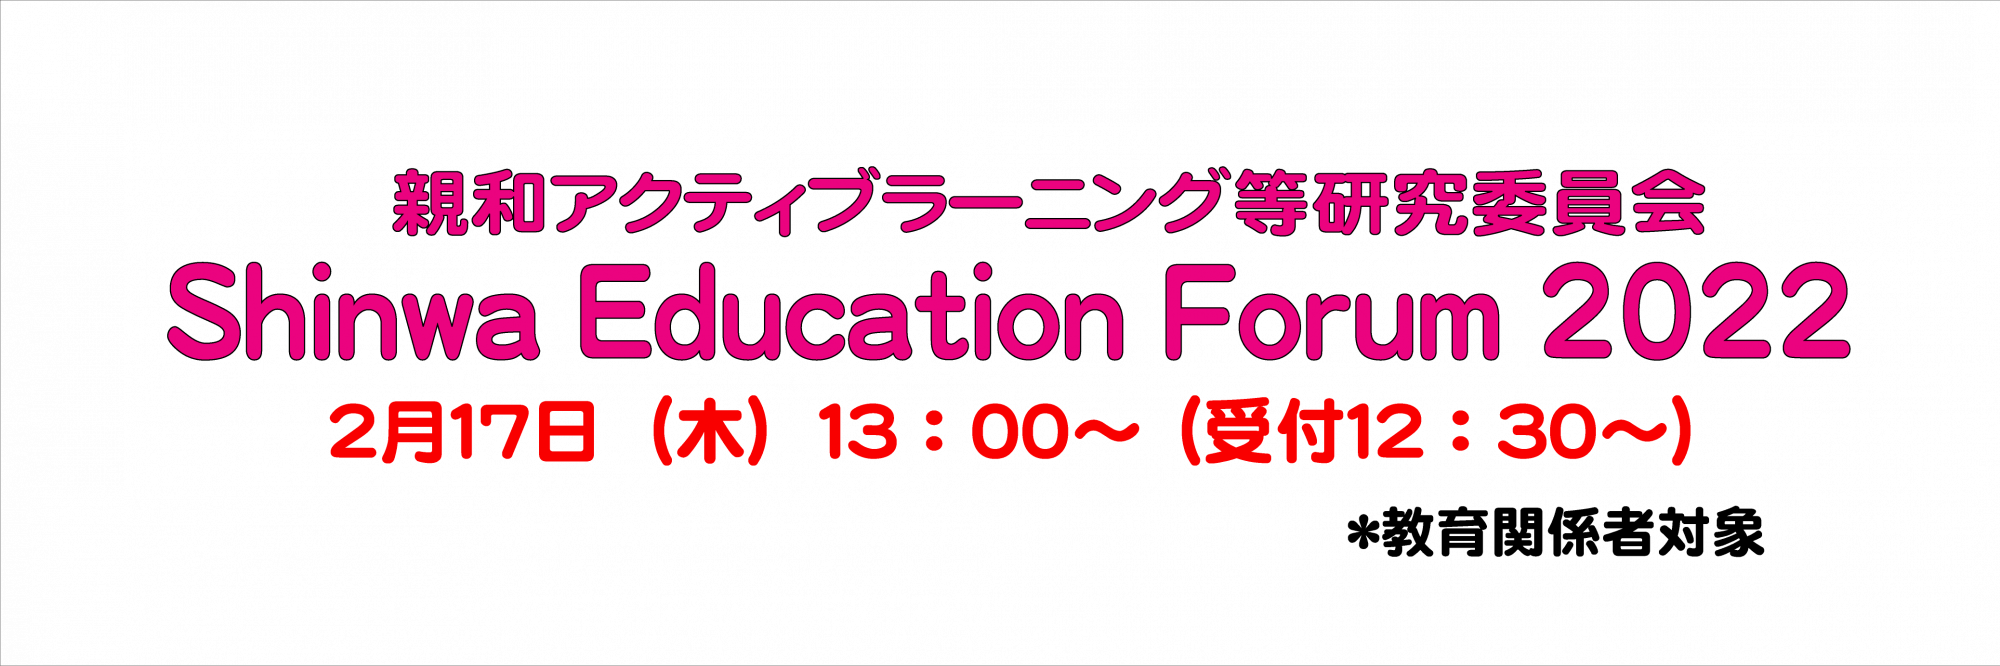 ShinwaEducationForum